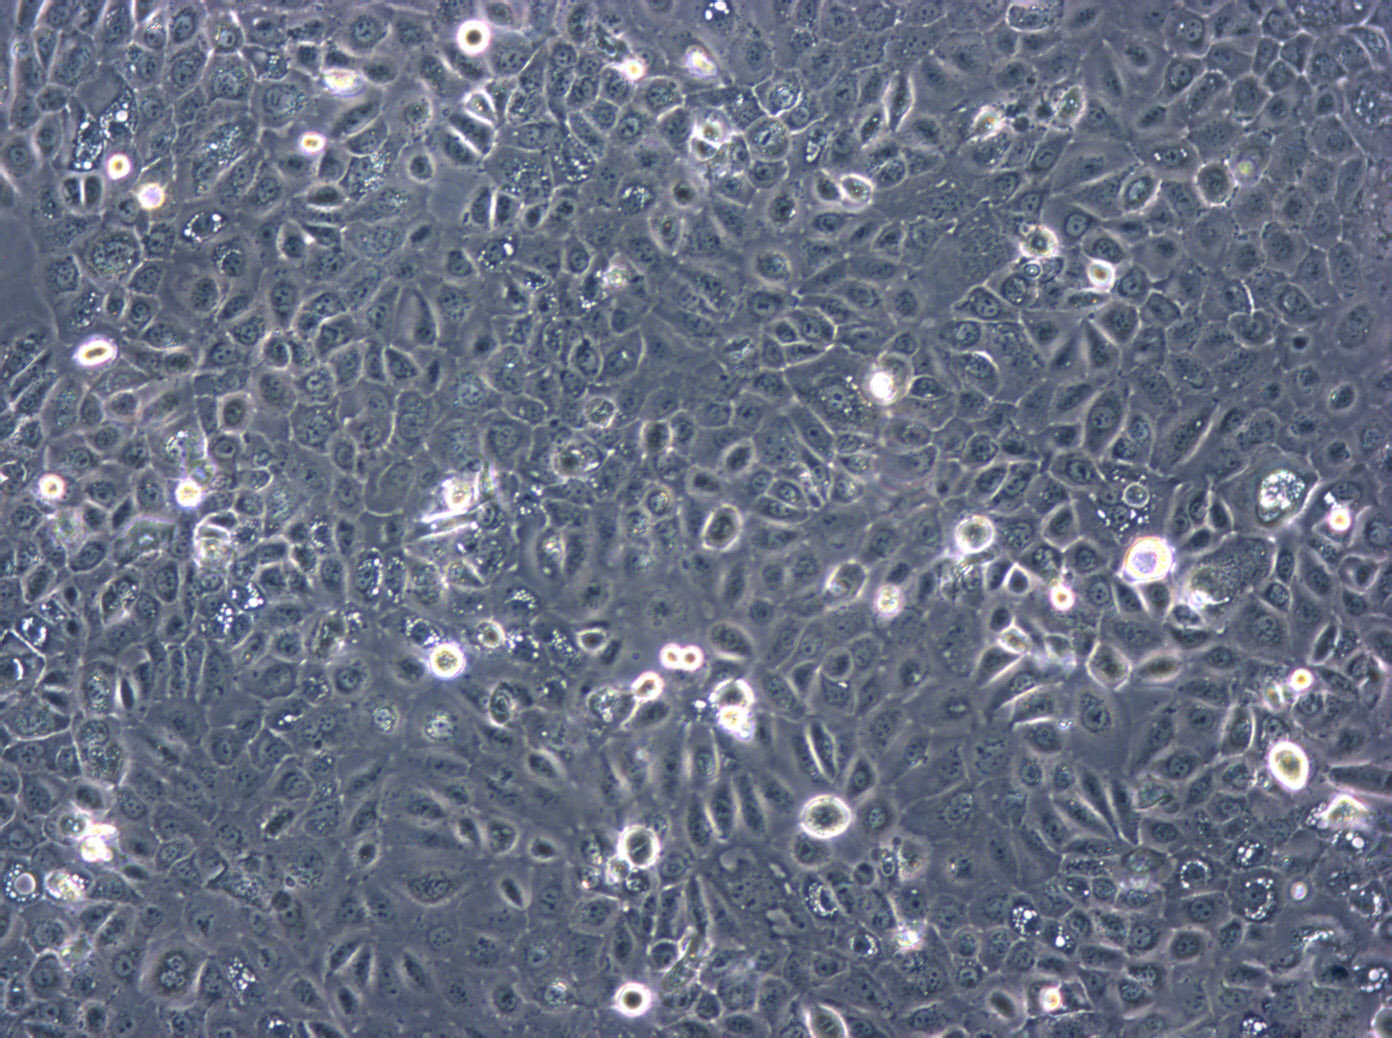 NCI-H2030 epithelioid cells人非小细胞肺癌细胞系,NCI-H2030 epithelioid cells